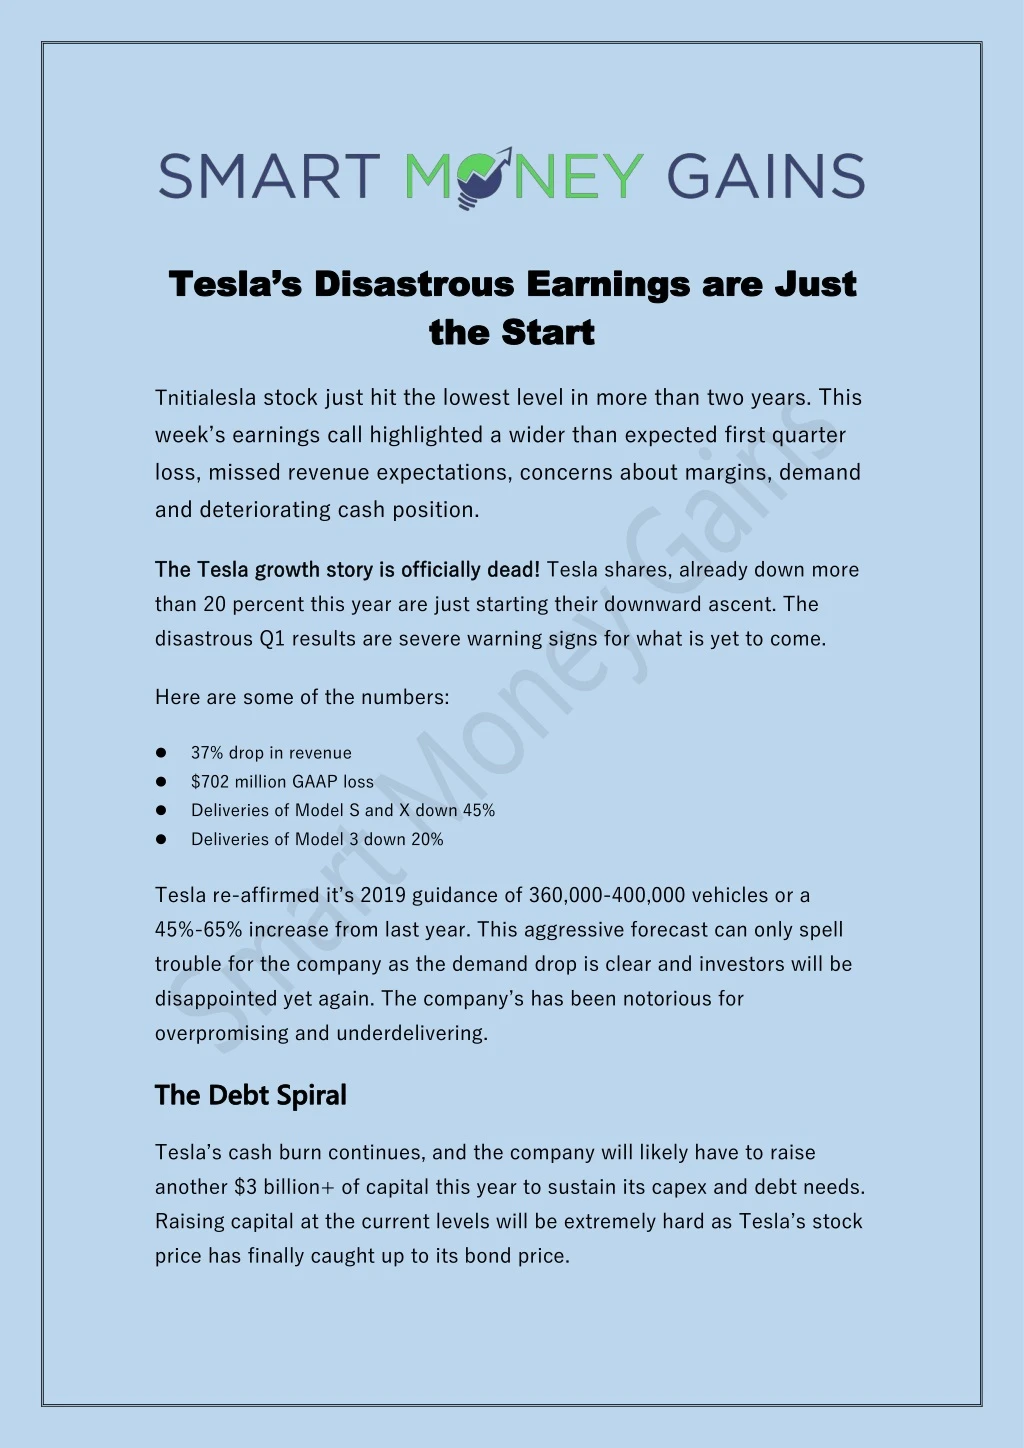 tesla tesla s s disastrous disastrous earnings